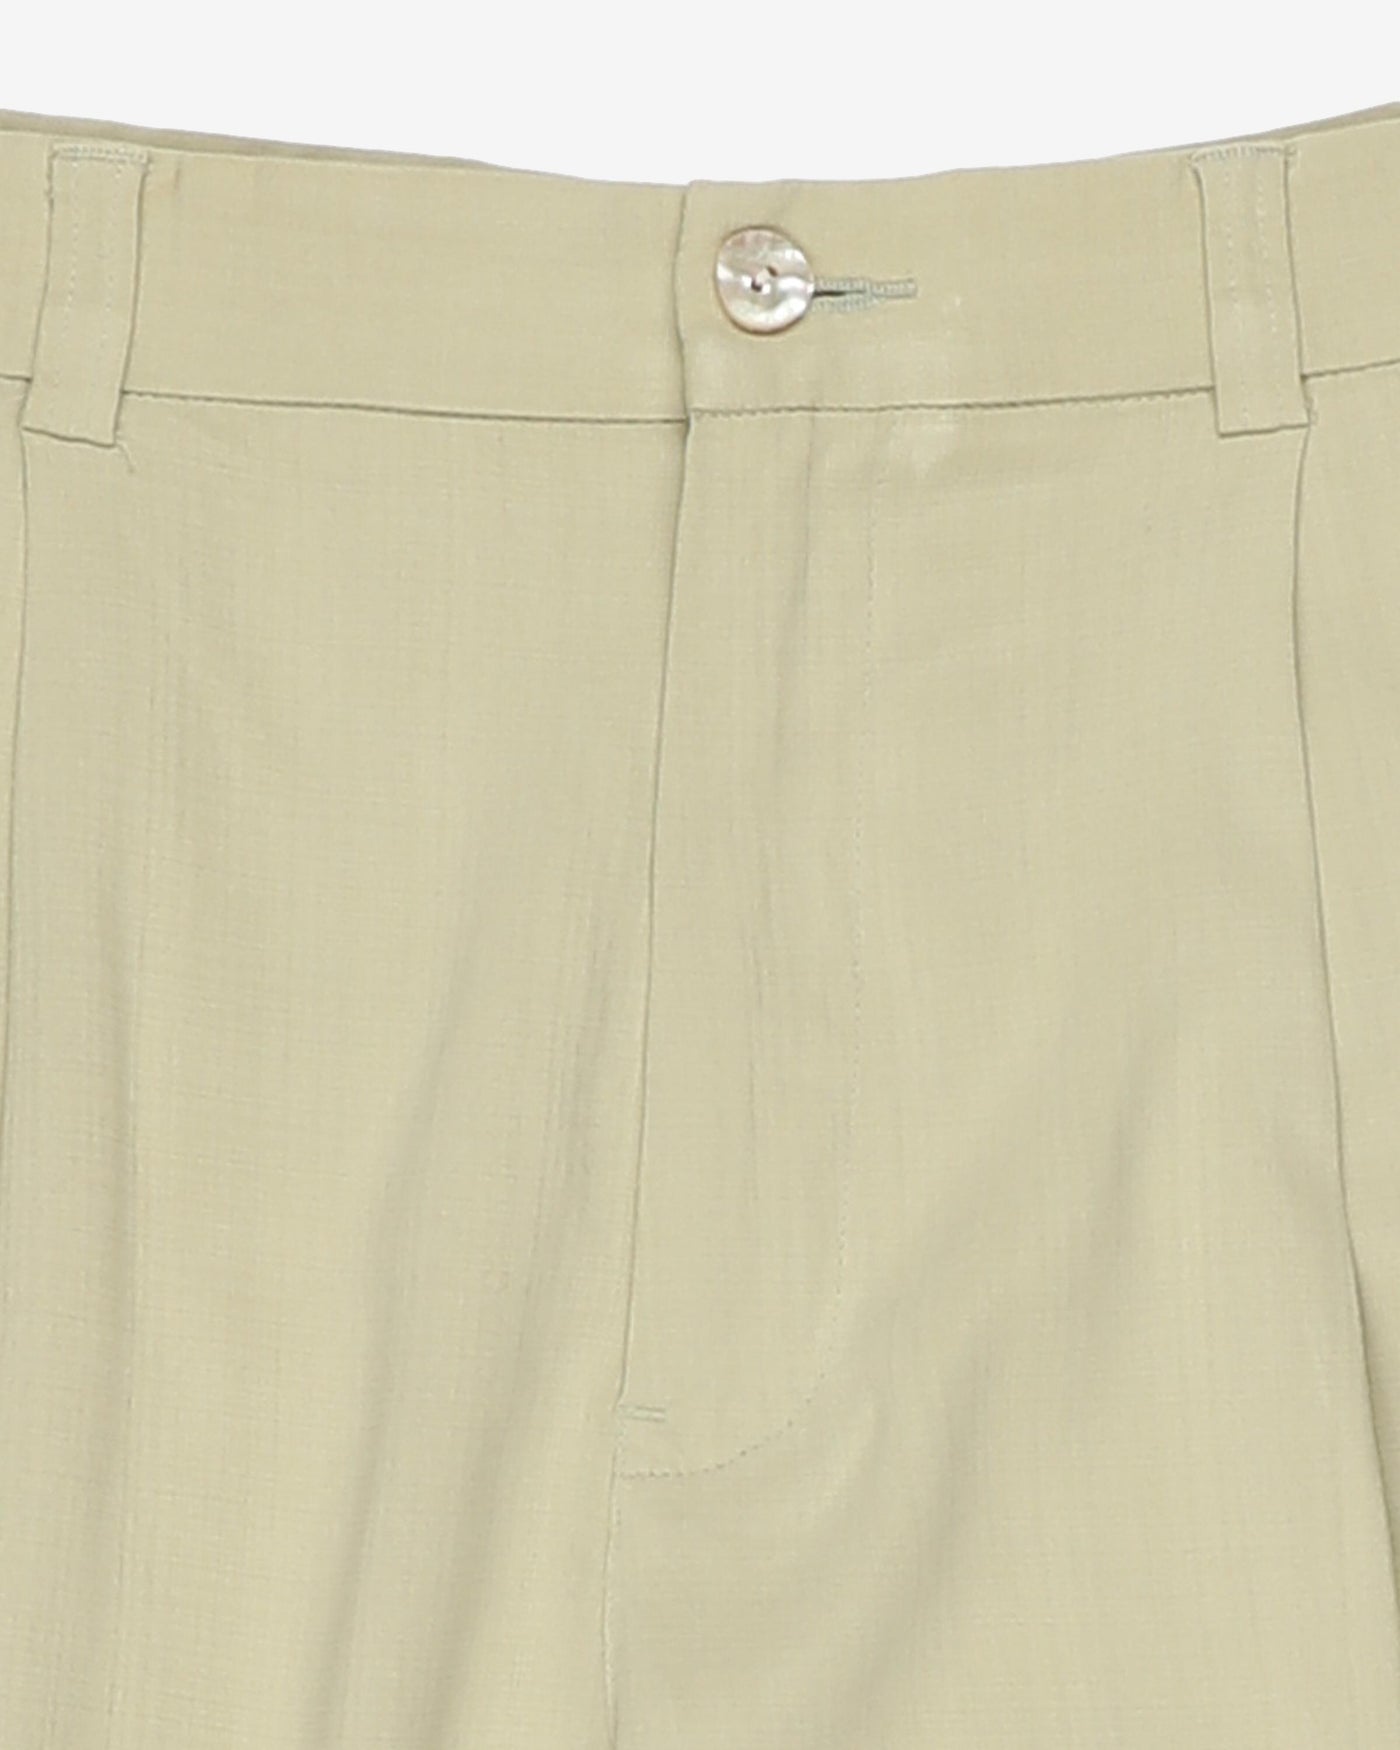 aloe green silk pleated shorts - w29